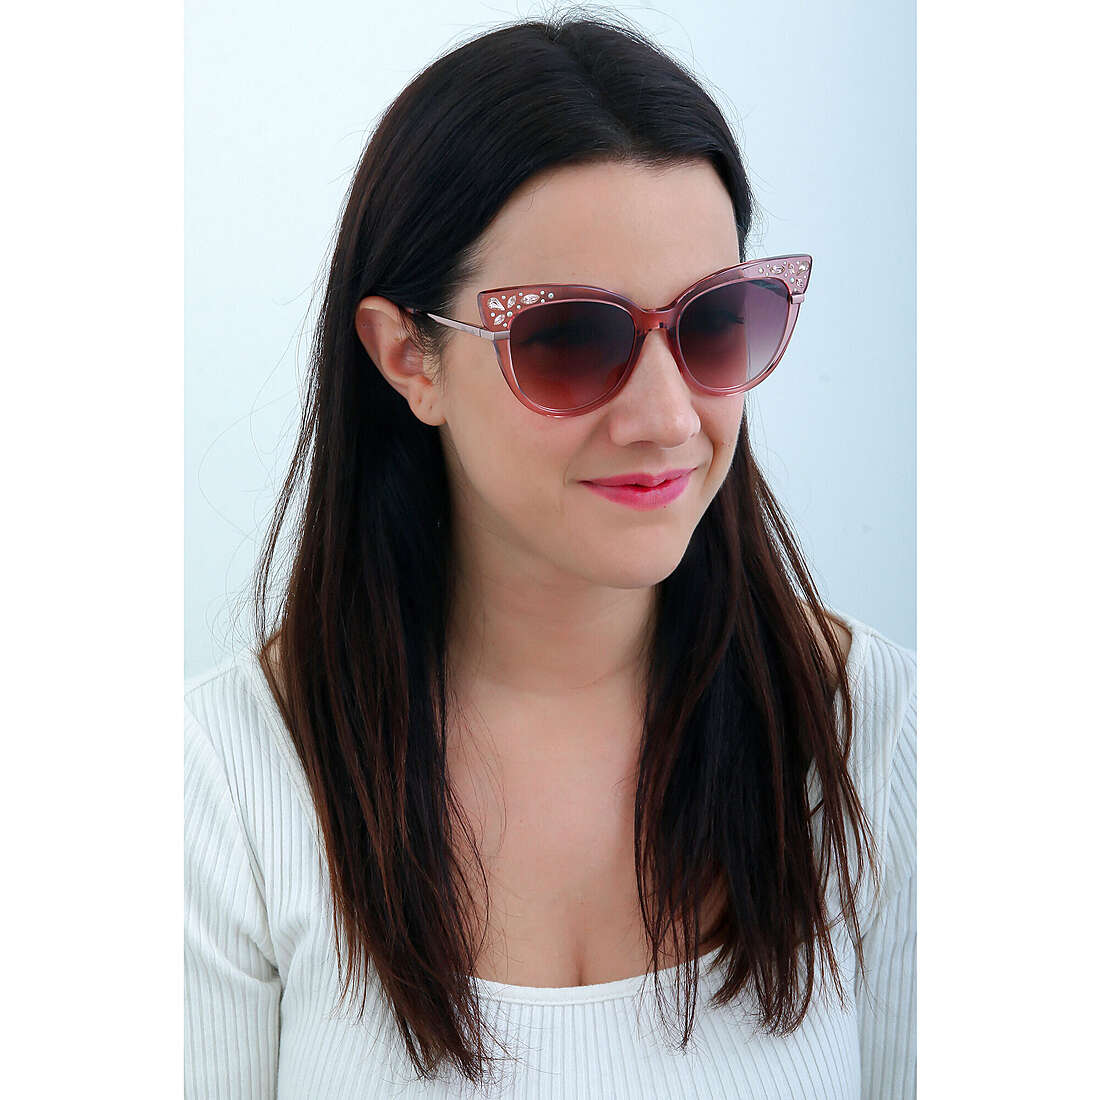 Blumarine occhiali da sole donna SBM835S550838 indosso